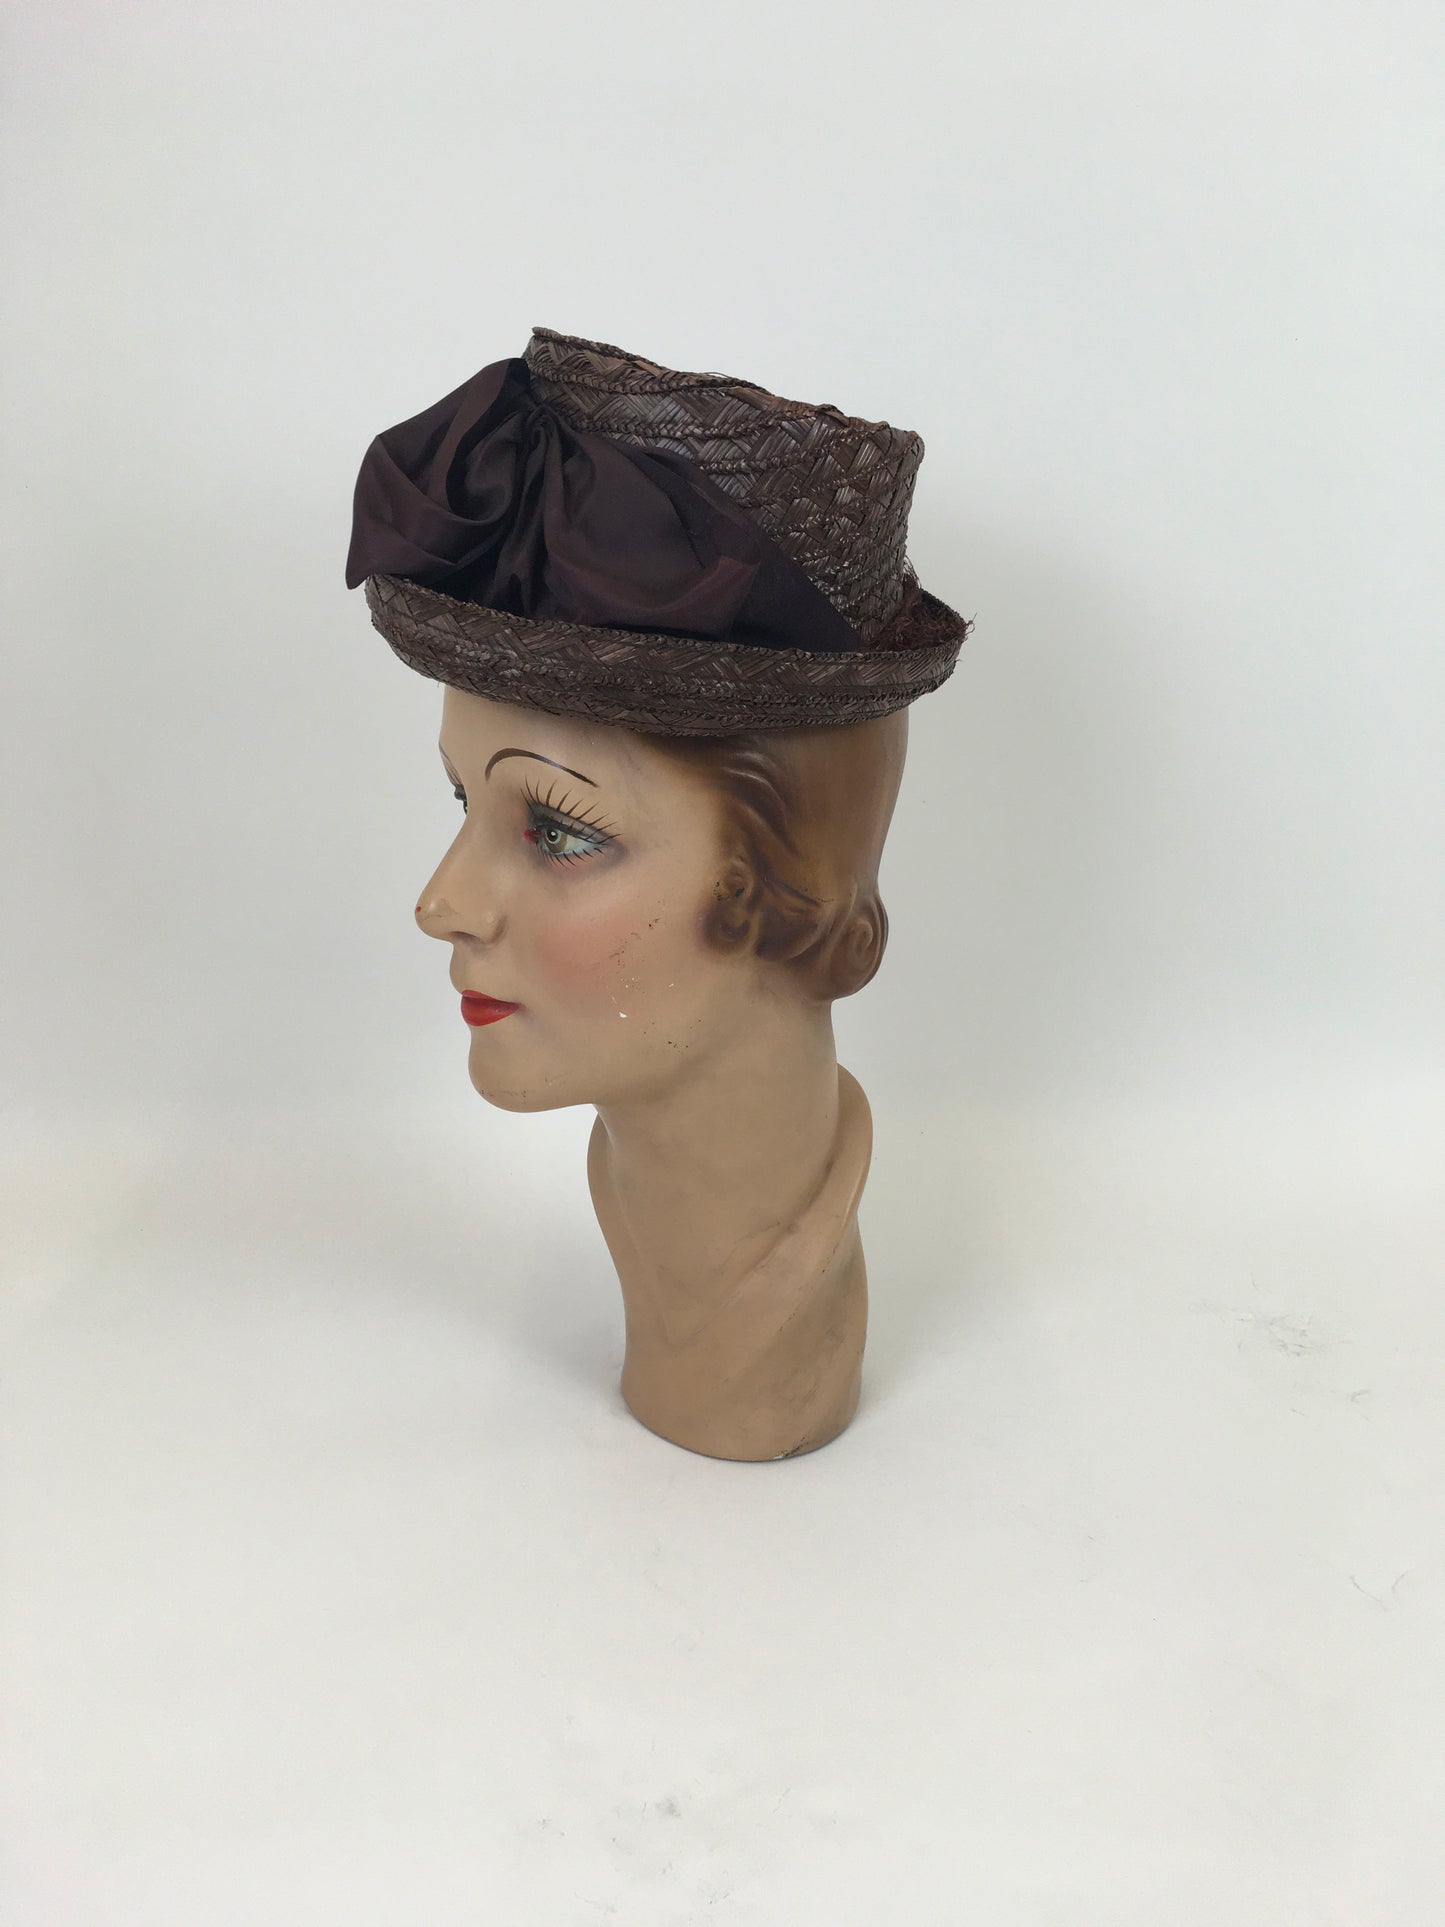 Original Fabulous 1940’s American Tilt Topper Hat - In Chocolate Brown